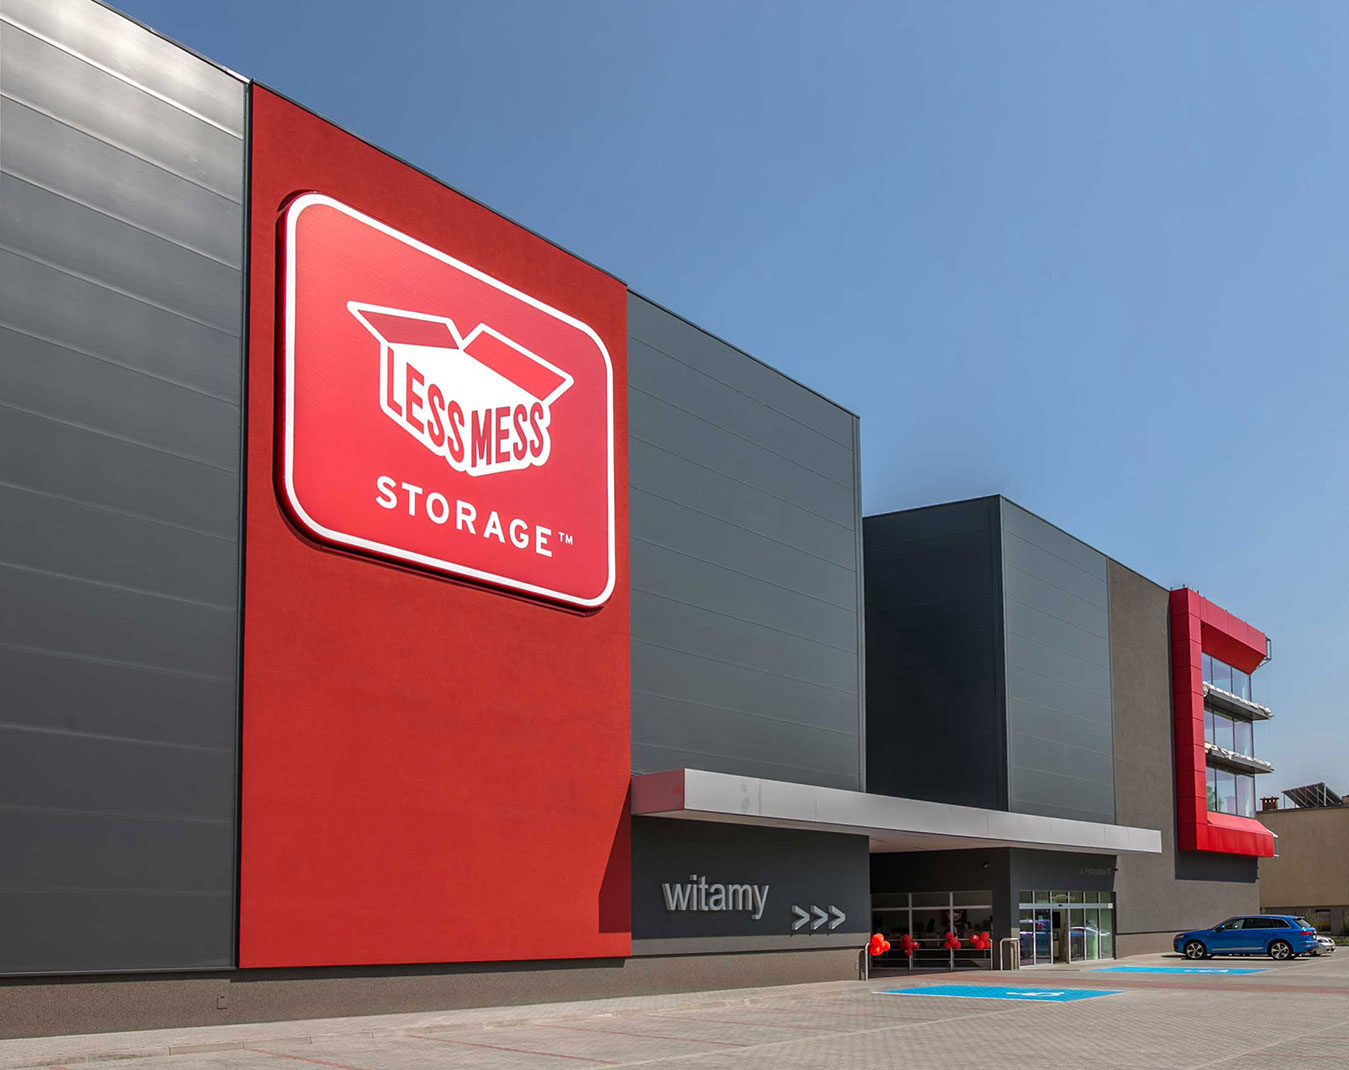 Self storage chain brand identity – Less Mess Storage